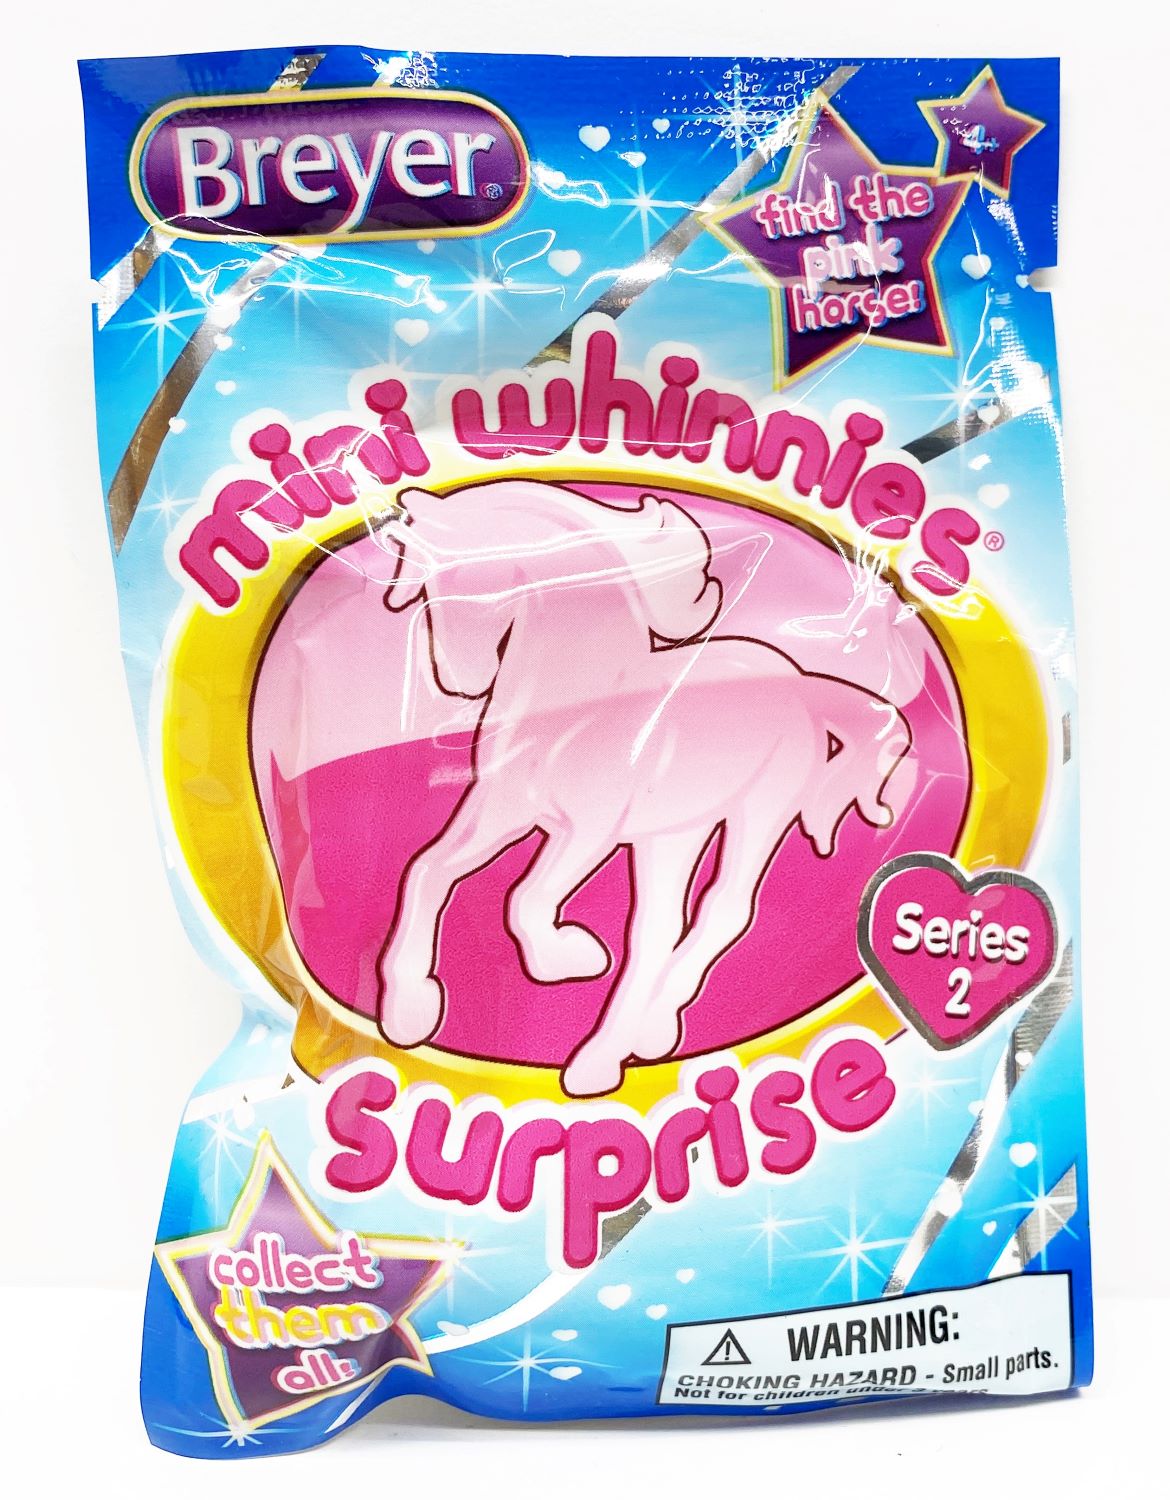 Mini Whinnies Horse Surprise Blind Bags - Series 2 (sgl pkg)